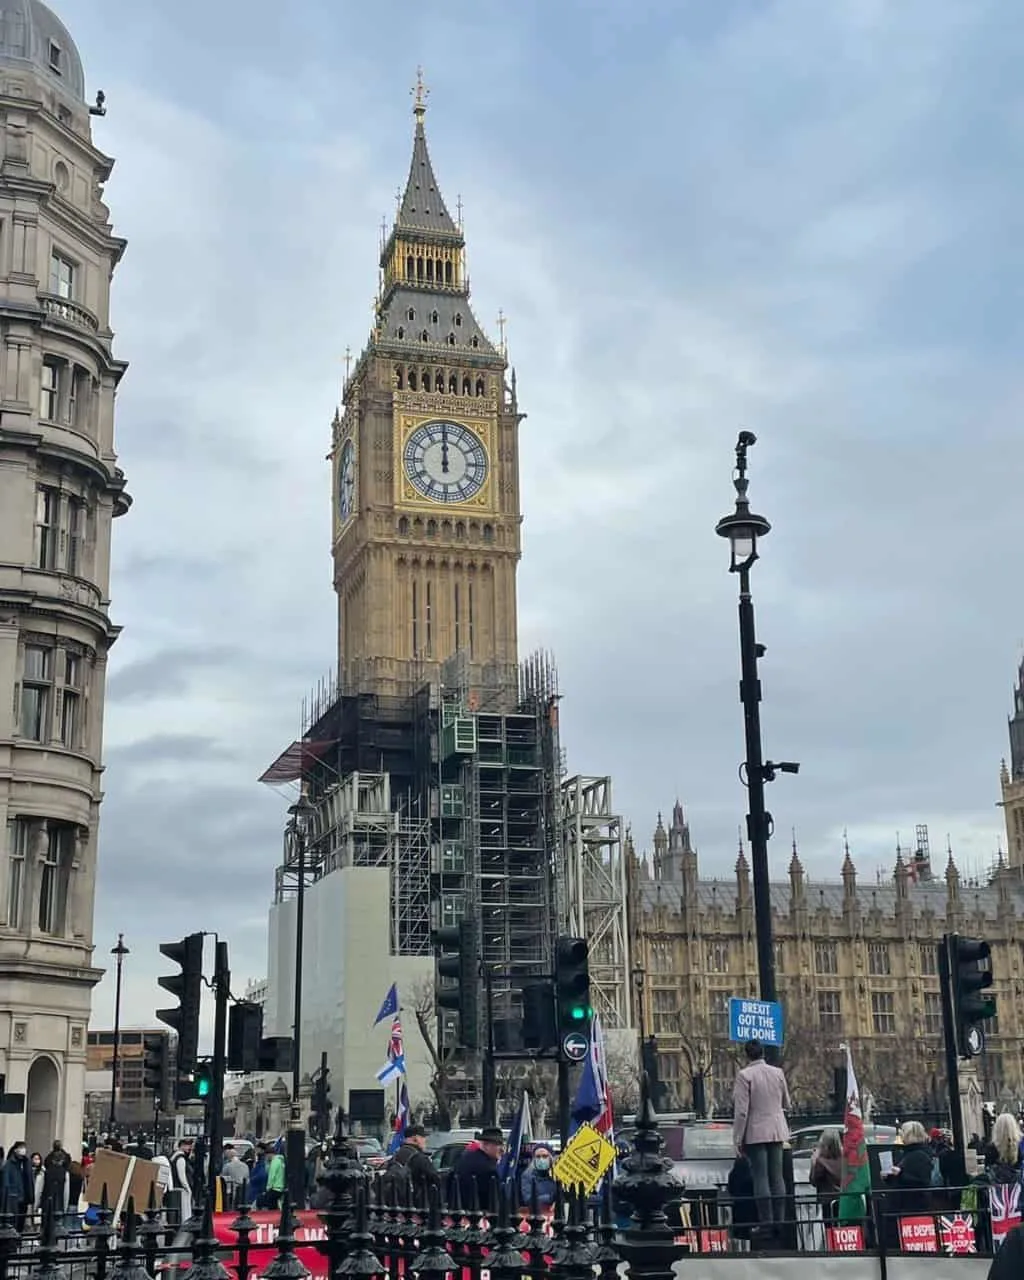 Big Ben clocktower in London, UK under construction